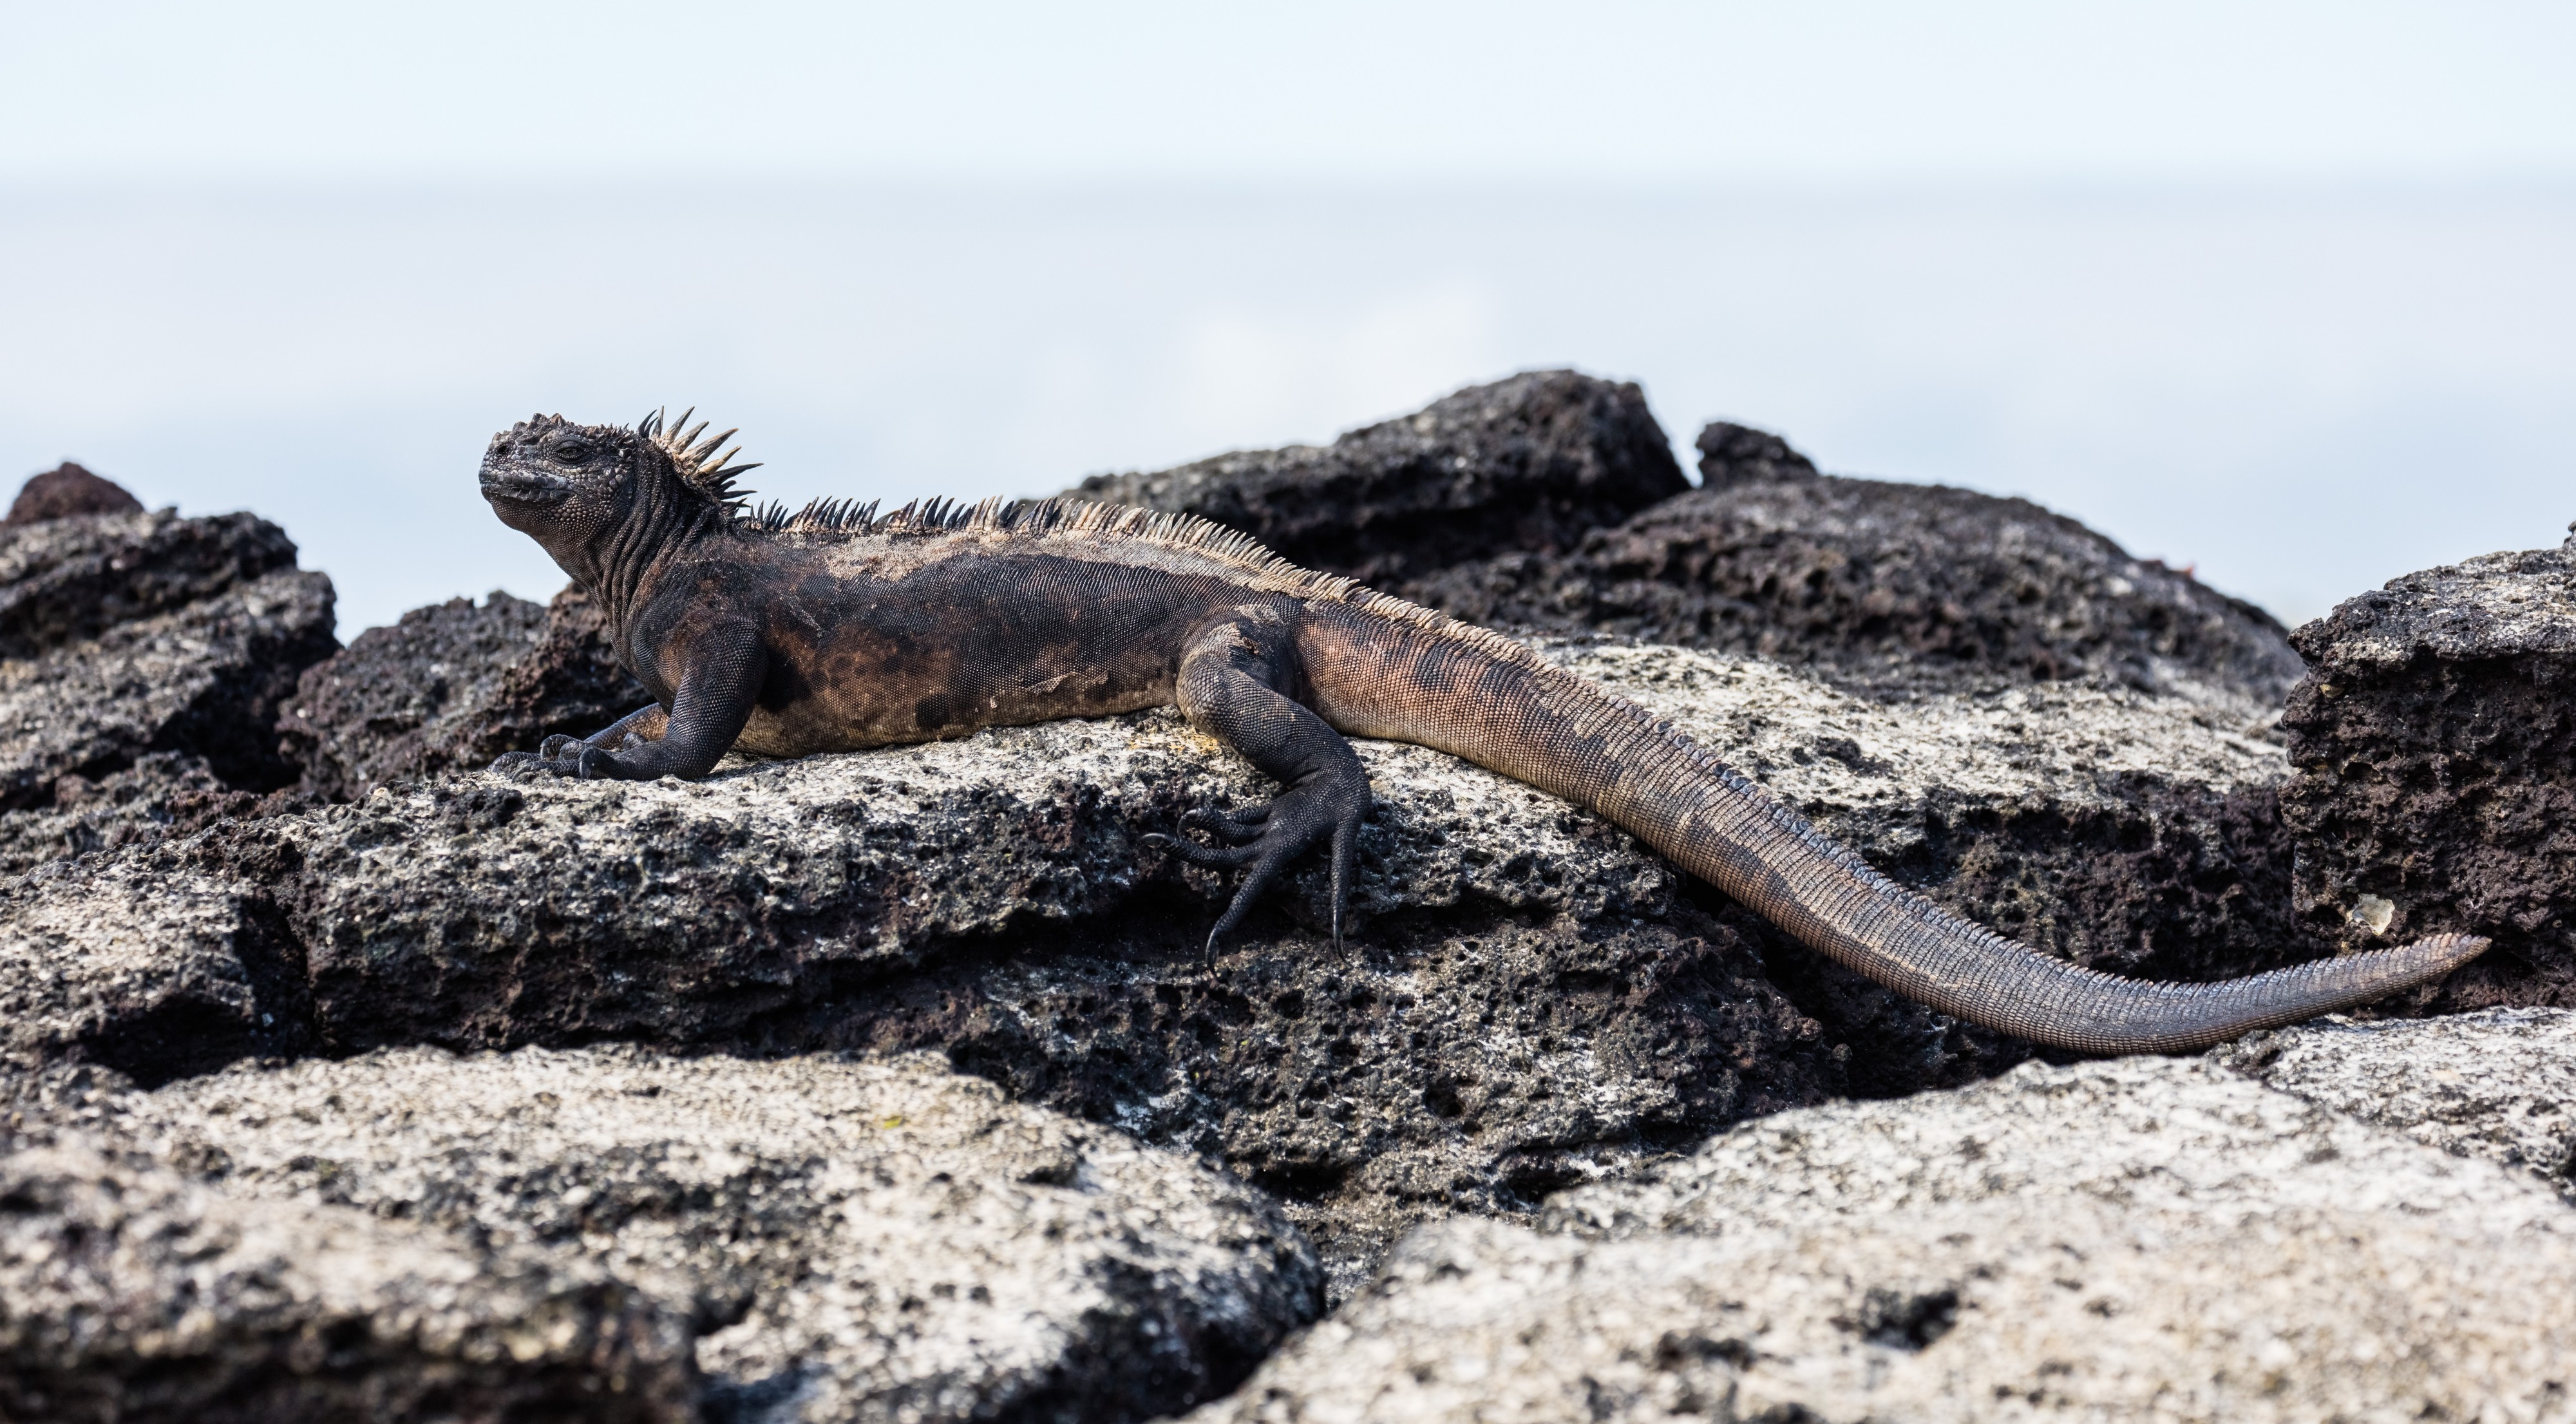 Iguana marina (Amblyrhynchus cristatus), Las Bachas, isla Santa Cruz, islas Galápagos, Ecuador, 2015-07-23, DD 23